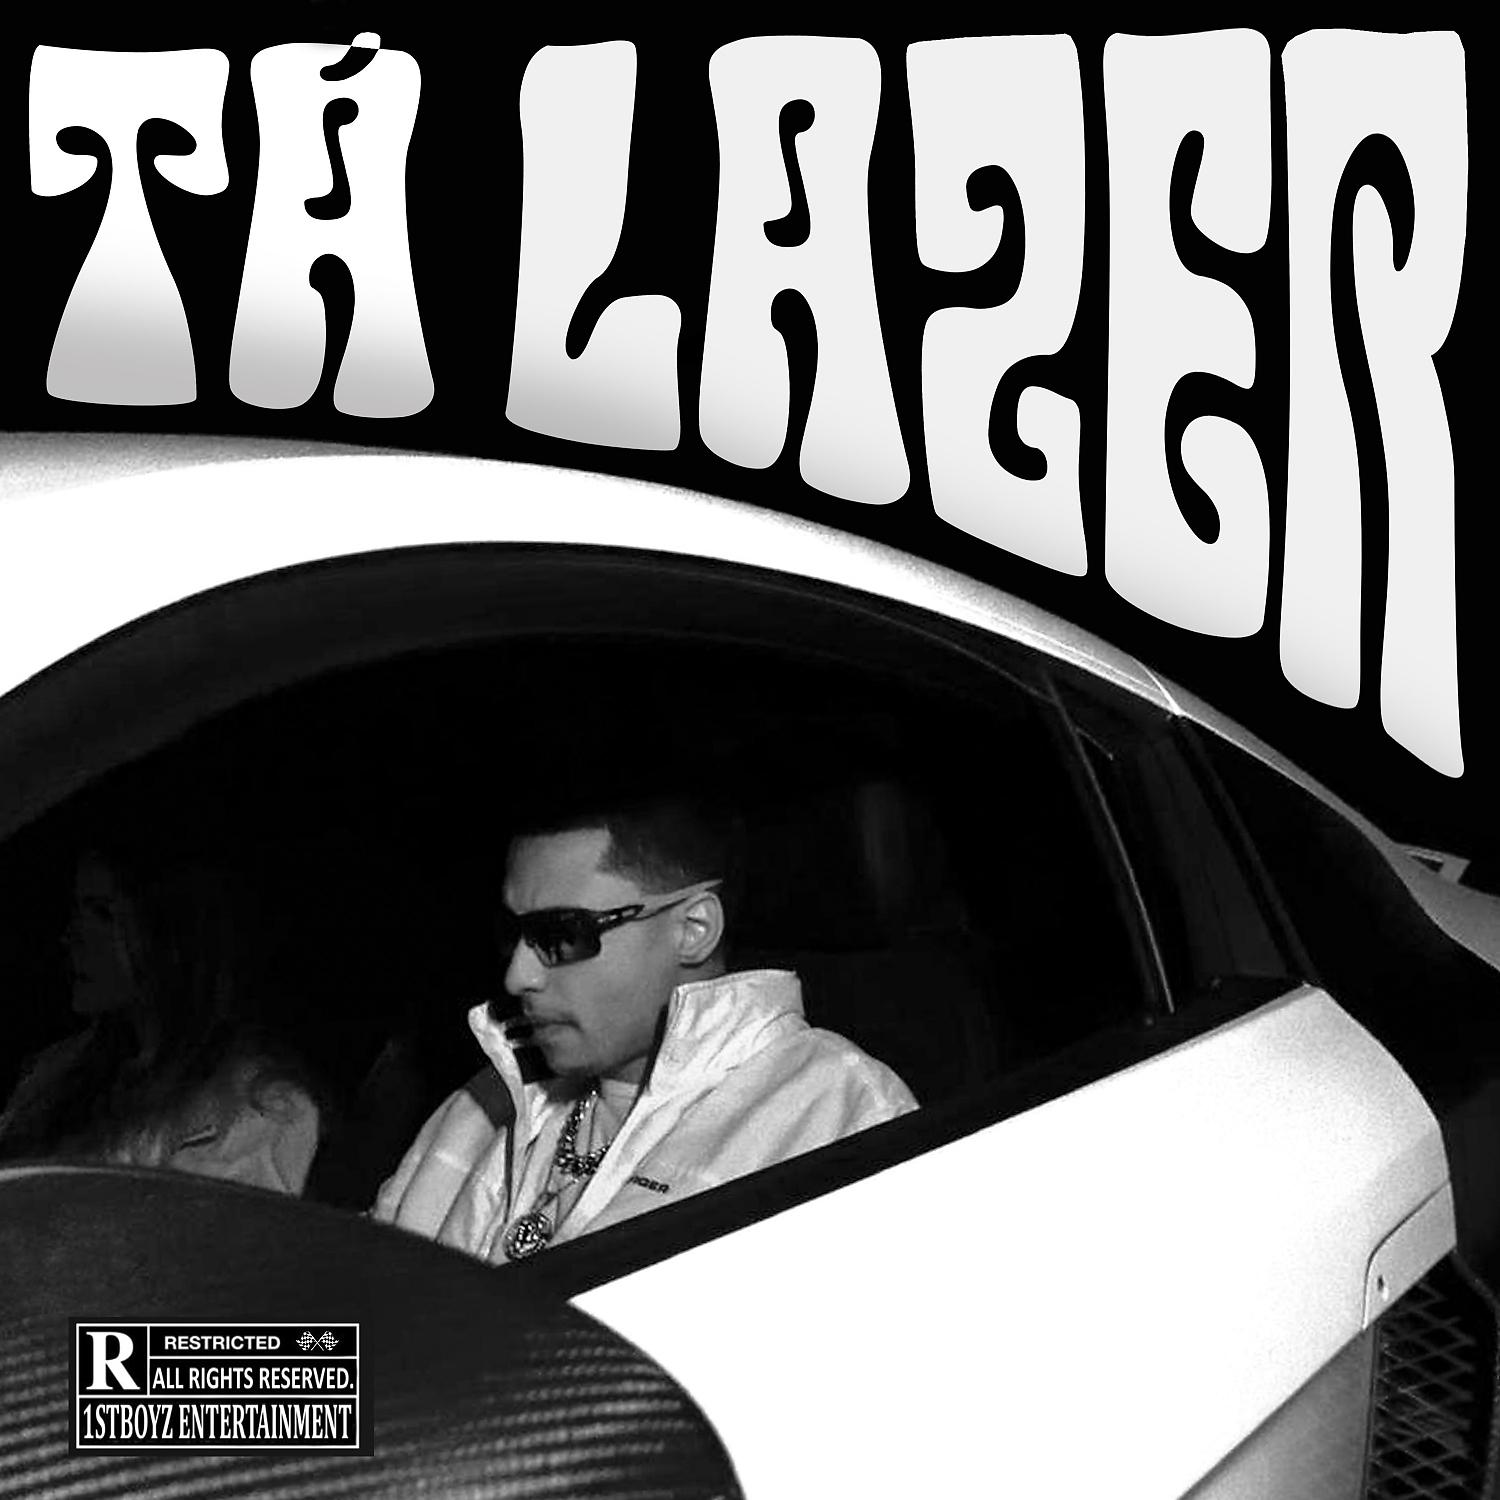 Постер альбома Tá Lazer